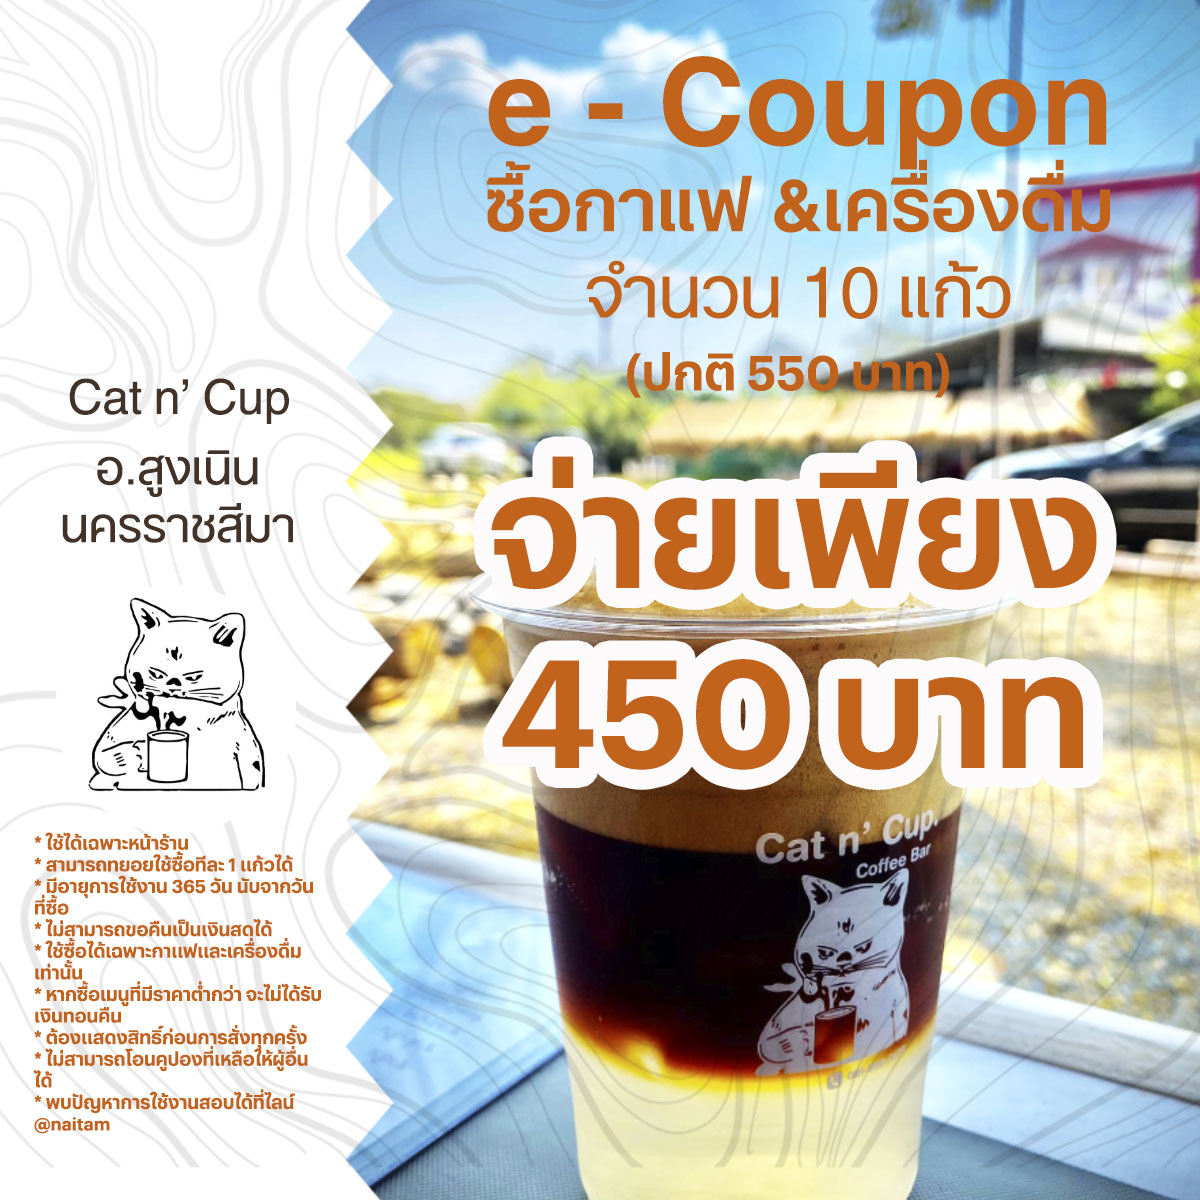 Cat n Cup  E-Voucher ซื้อกาแฟและเครื่องดื่มราคาพิเศษ 450 บาท